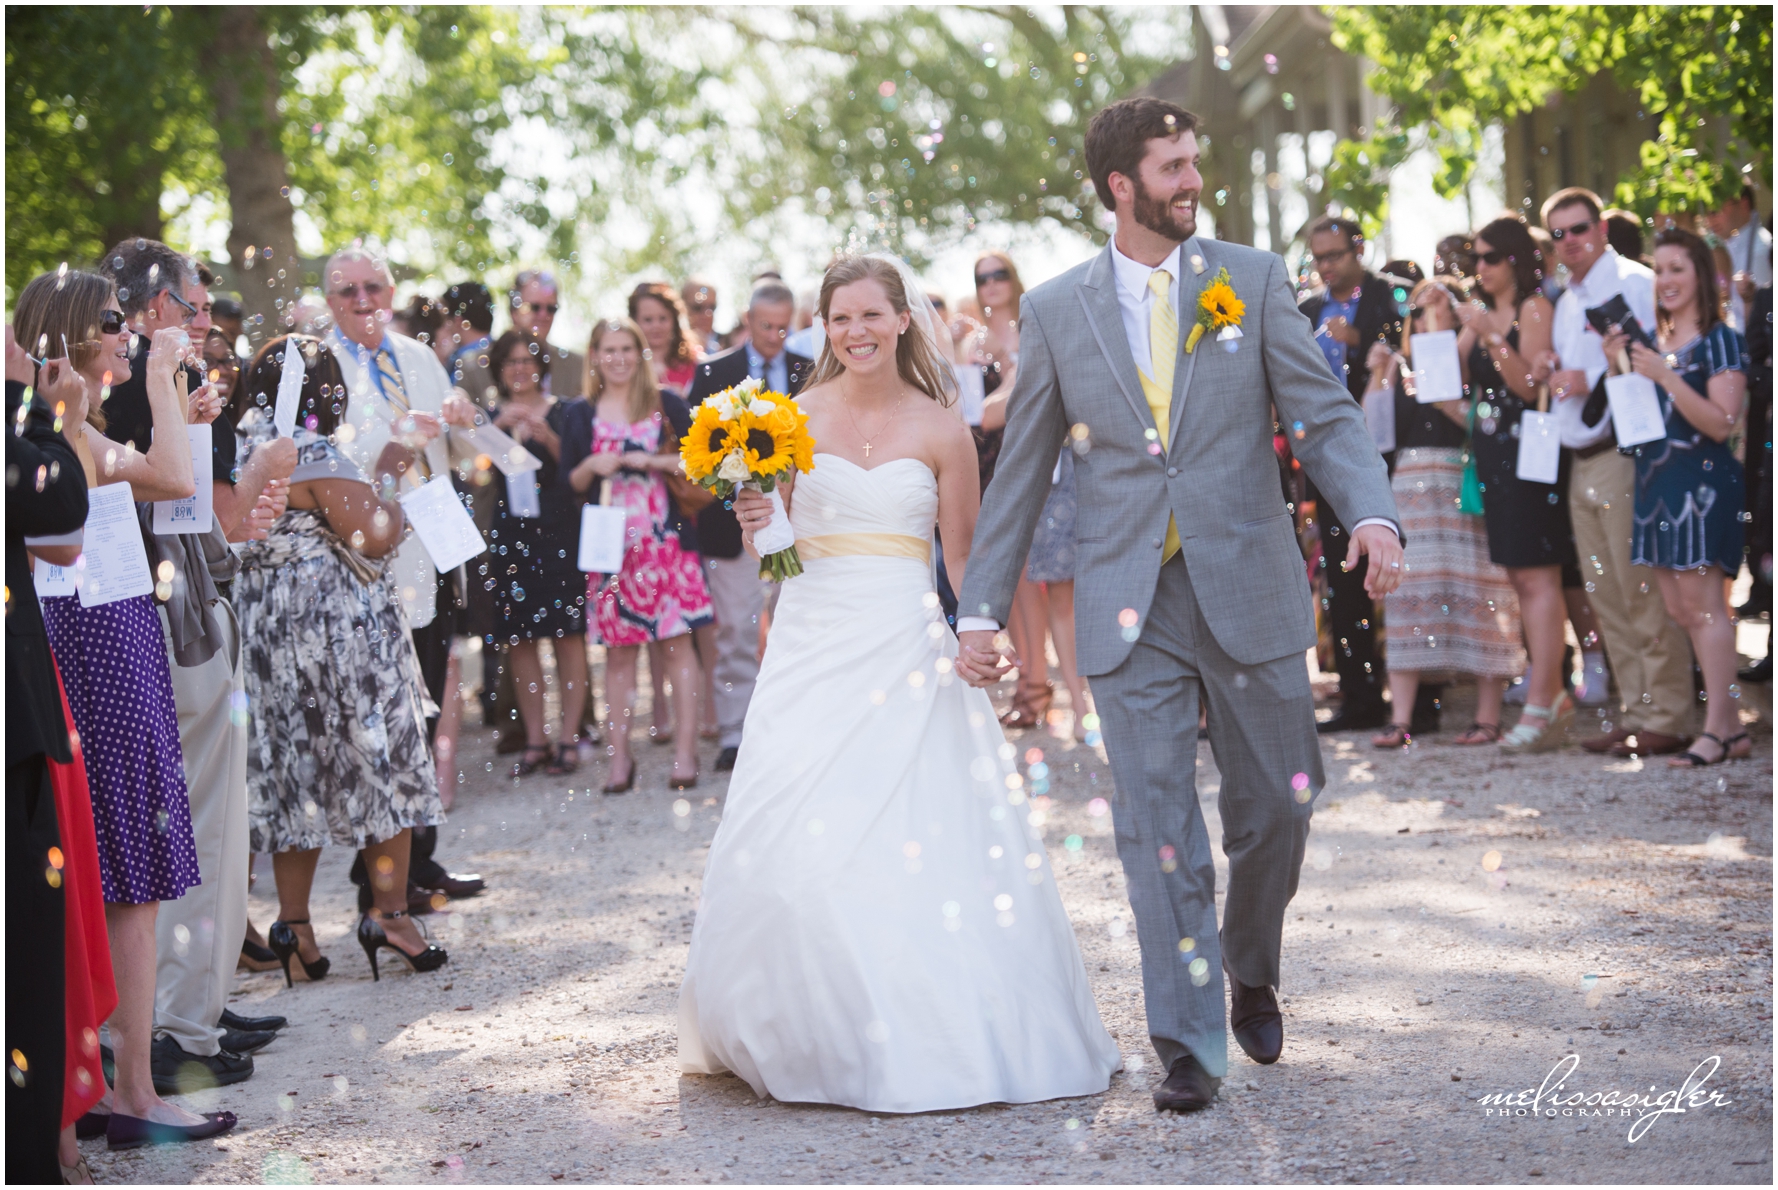 Bride and Groom bubble exit at Victorian Veranda by Lawrence Kansas wedding photographer Melissa Sigler